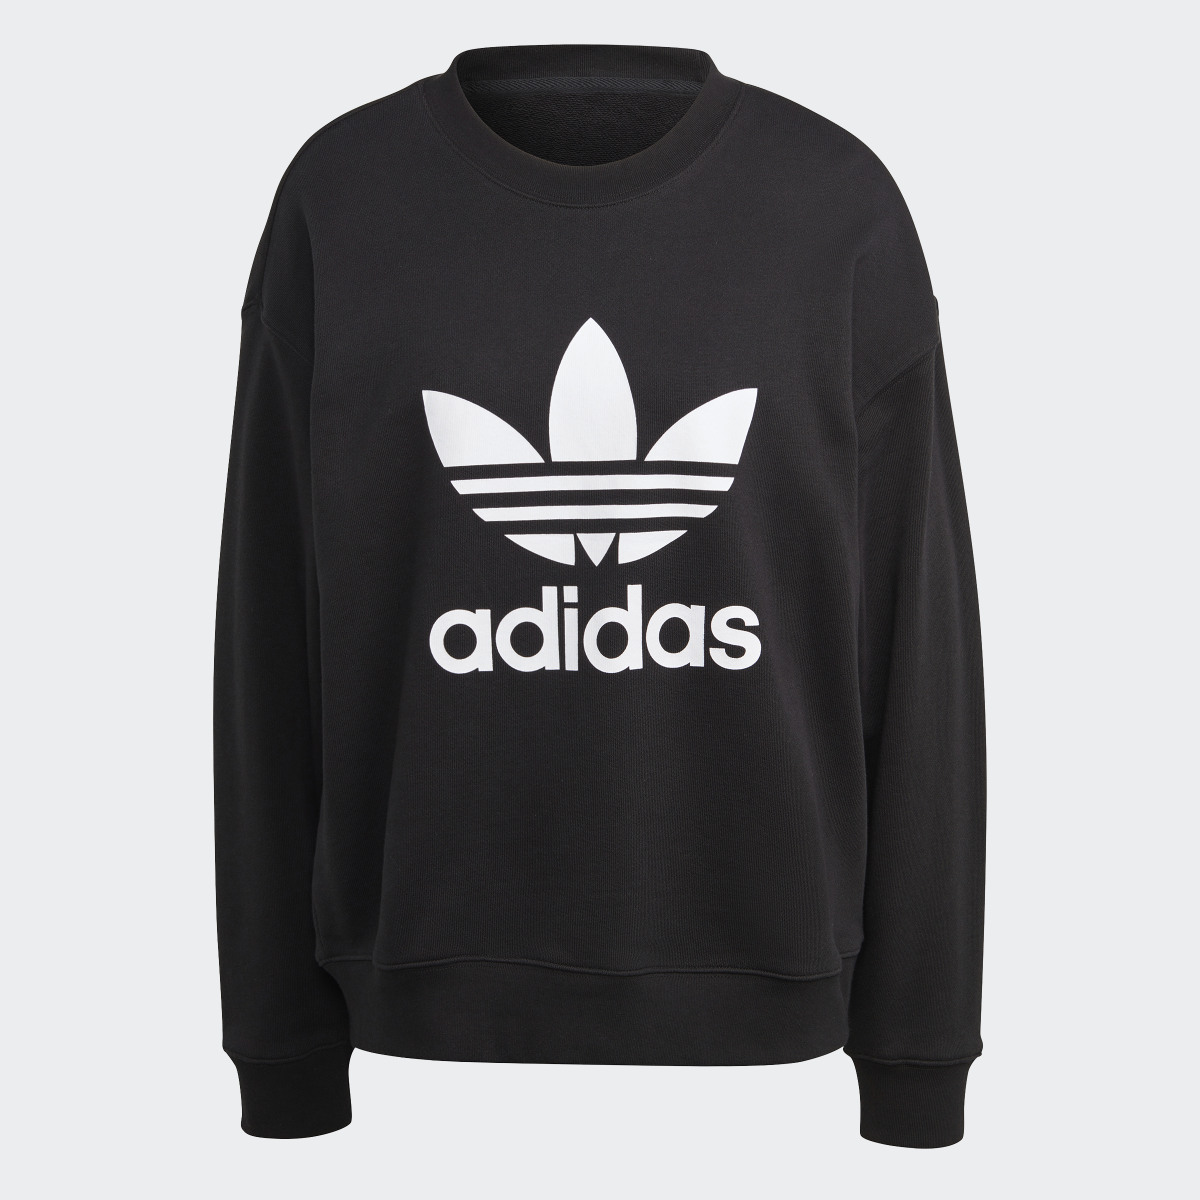 Adidas Trefoil Sweatshirt. 5